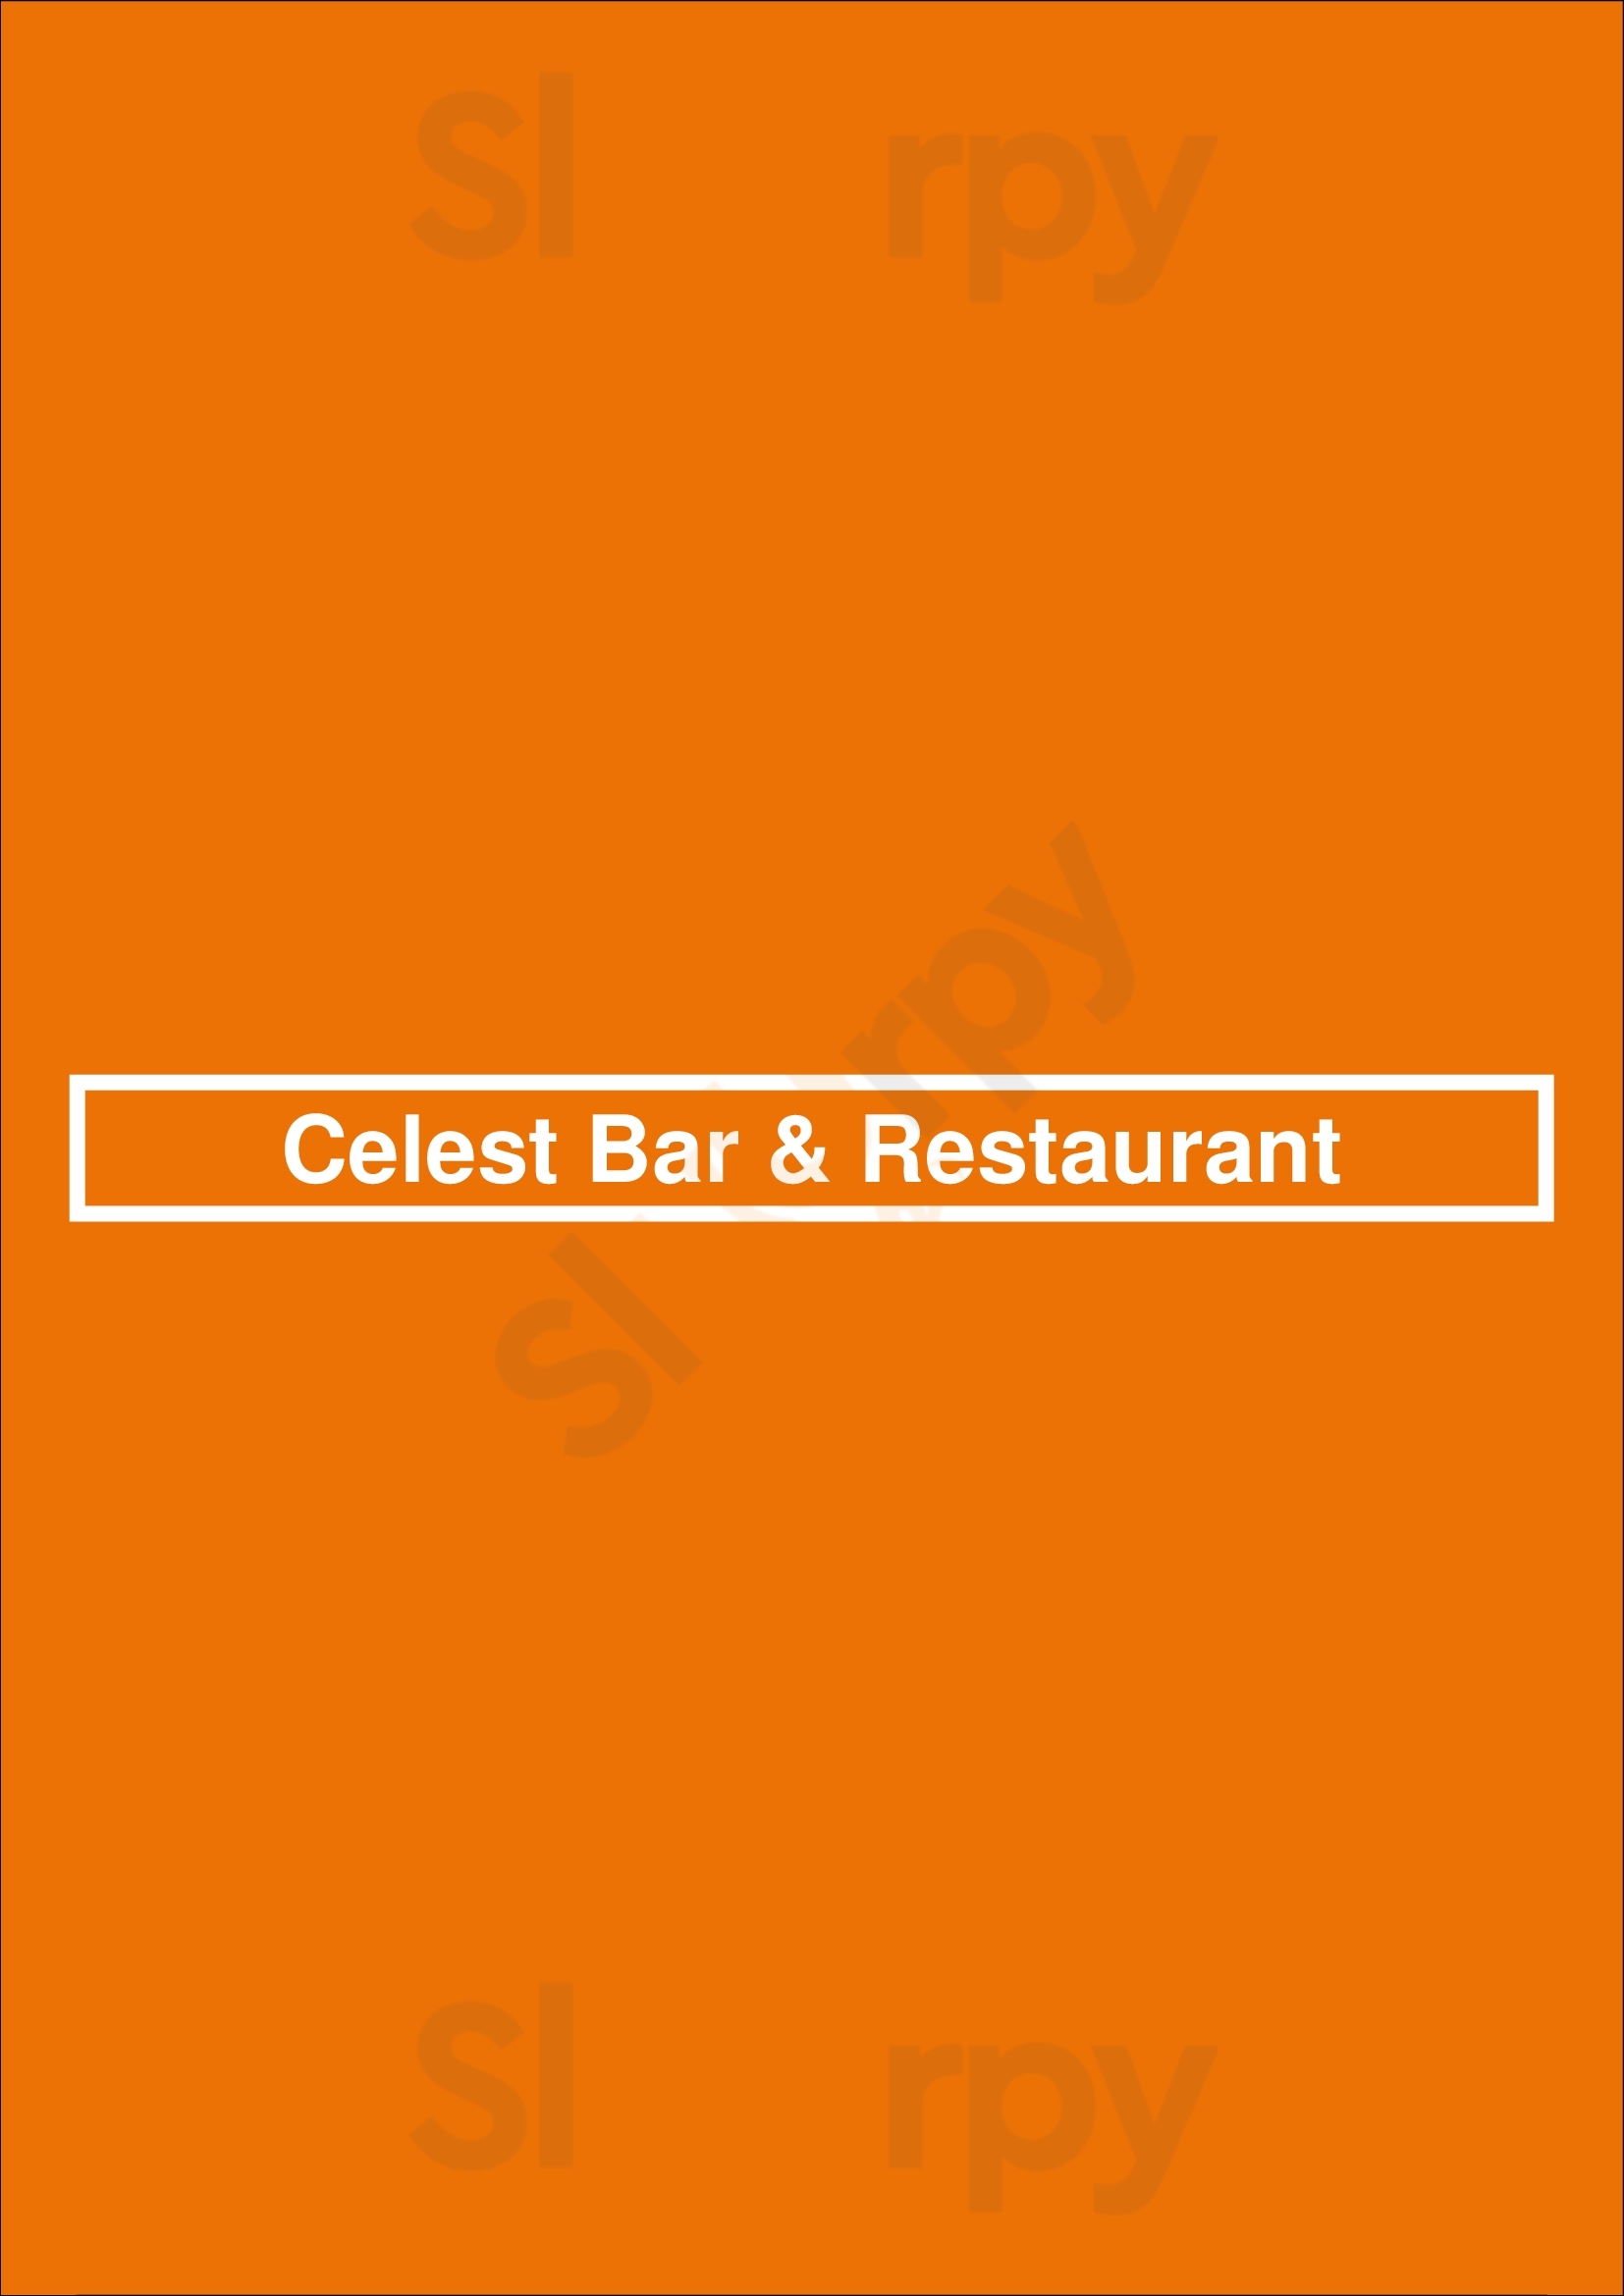 Celest Bar & Restaurant Lyon Menu - 1